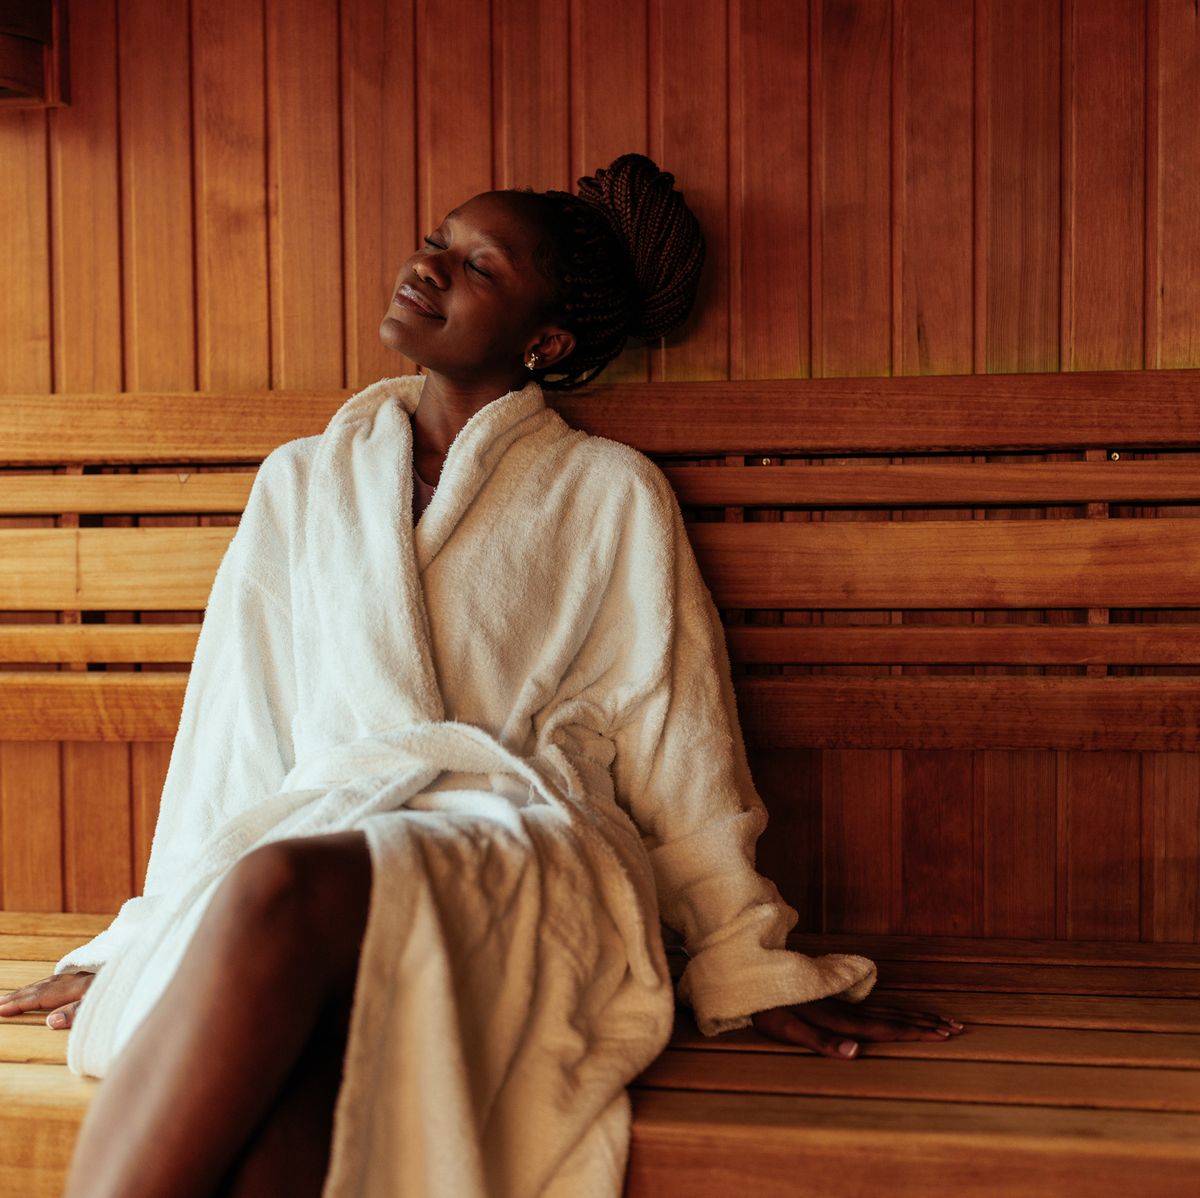 https://hips.hearstapps.com/hmg-prod/images/young-black-woman-enjoying-in-sauna-royalty-free-image-1707761078.jpg?crop=0.668xw:1.00xh;0.0737xw,0&resize=1200:*